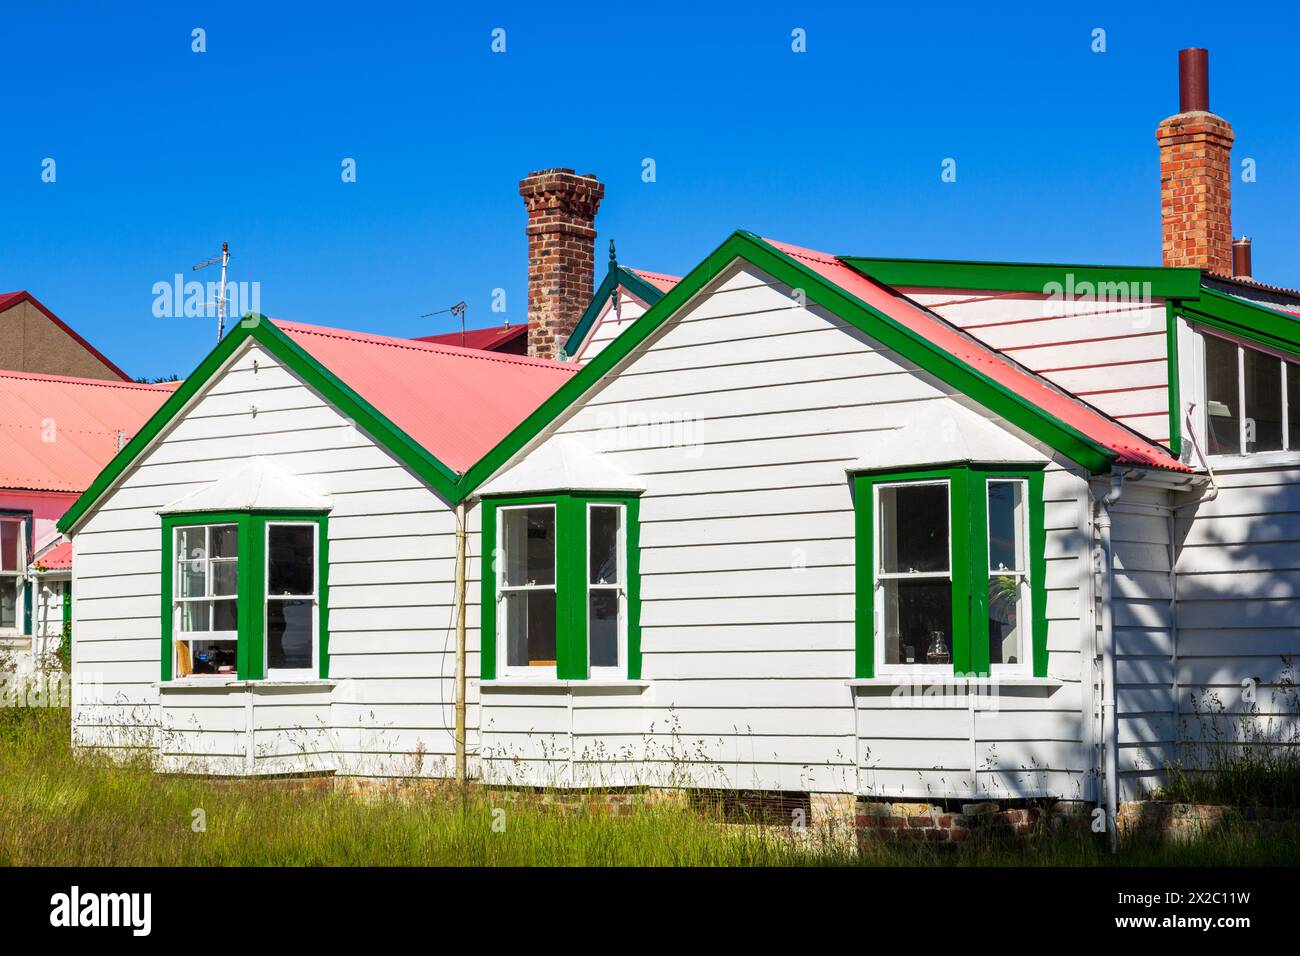 Ross Road, Port Stanley, Falklandinseln, Großbritannien Stockfoto